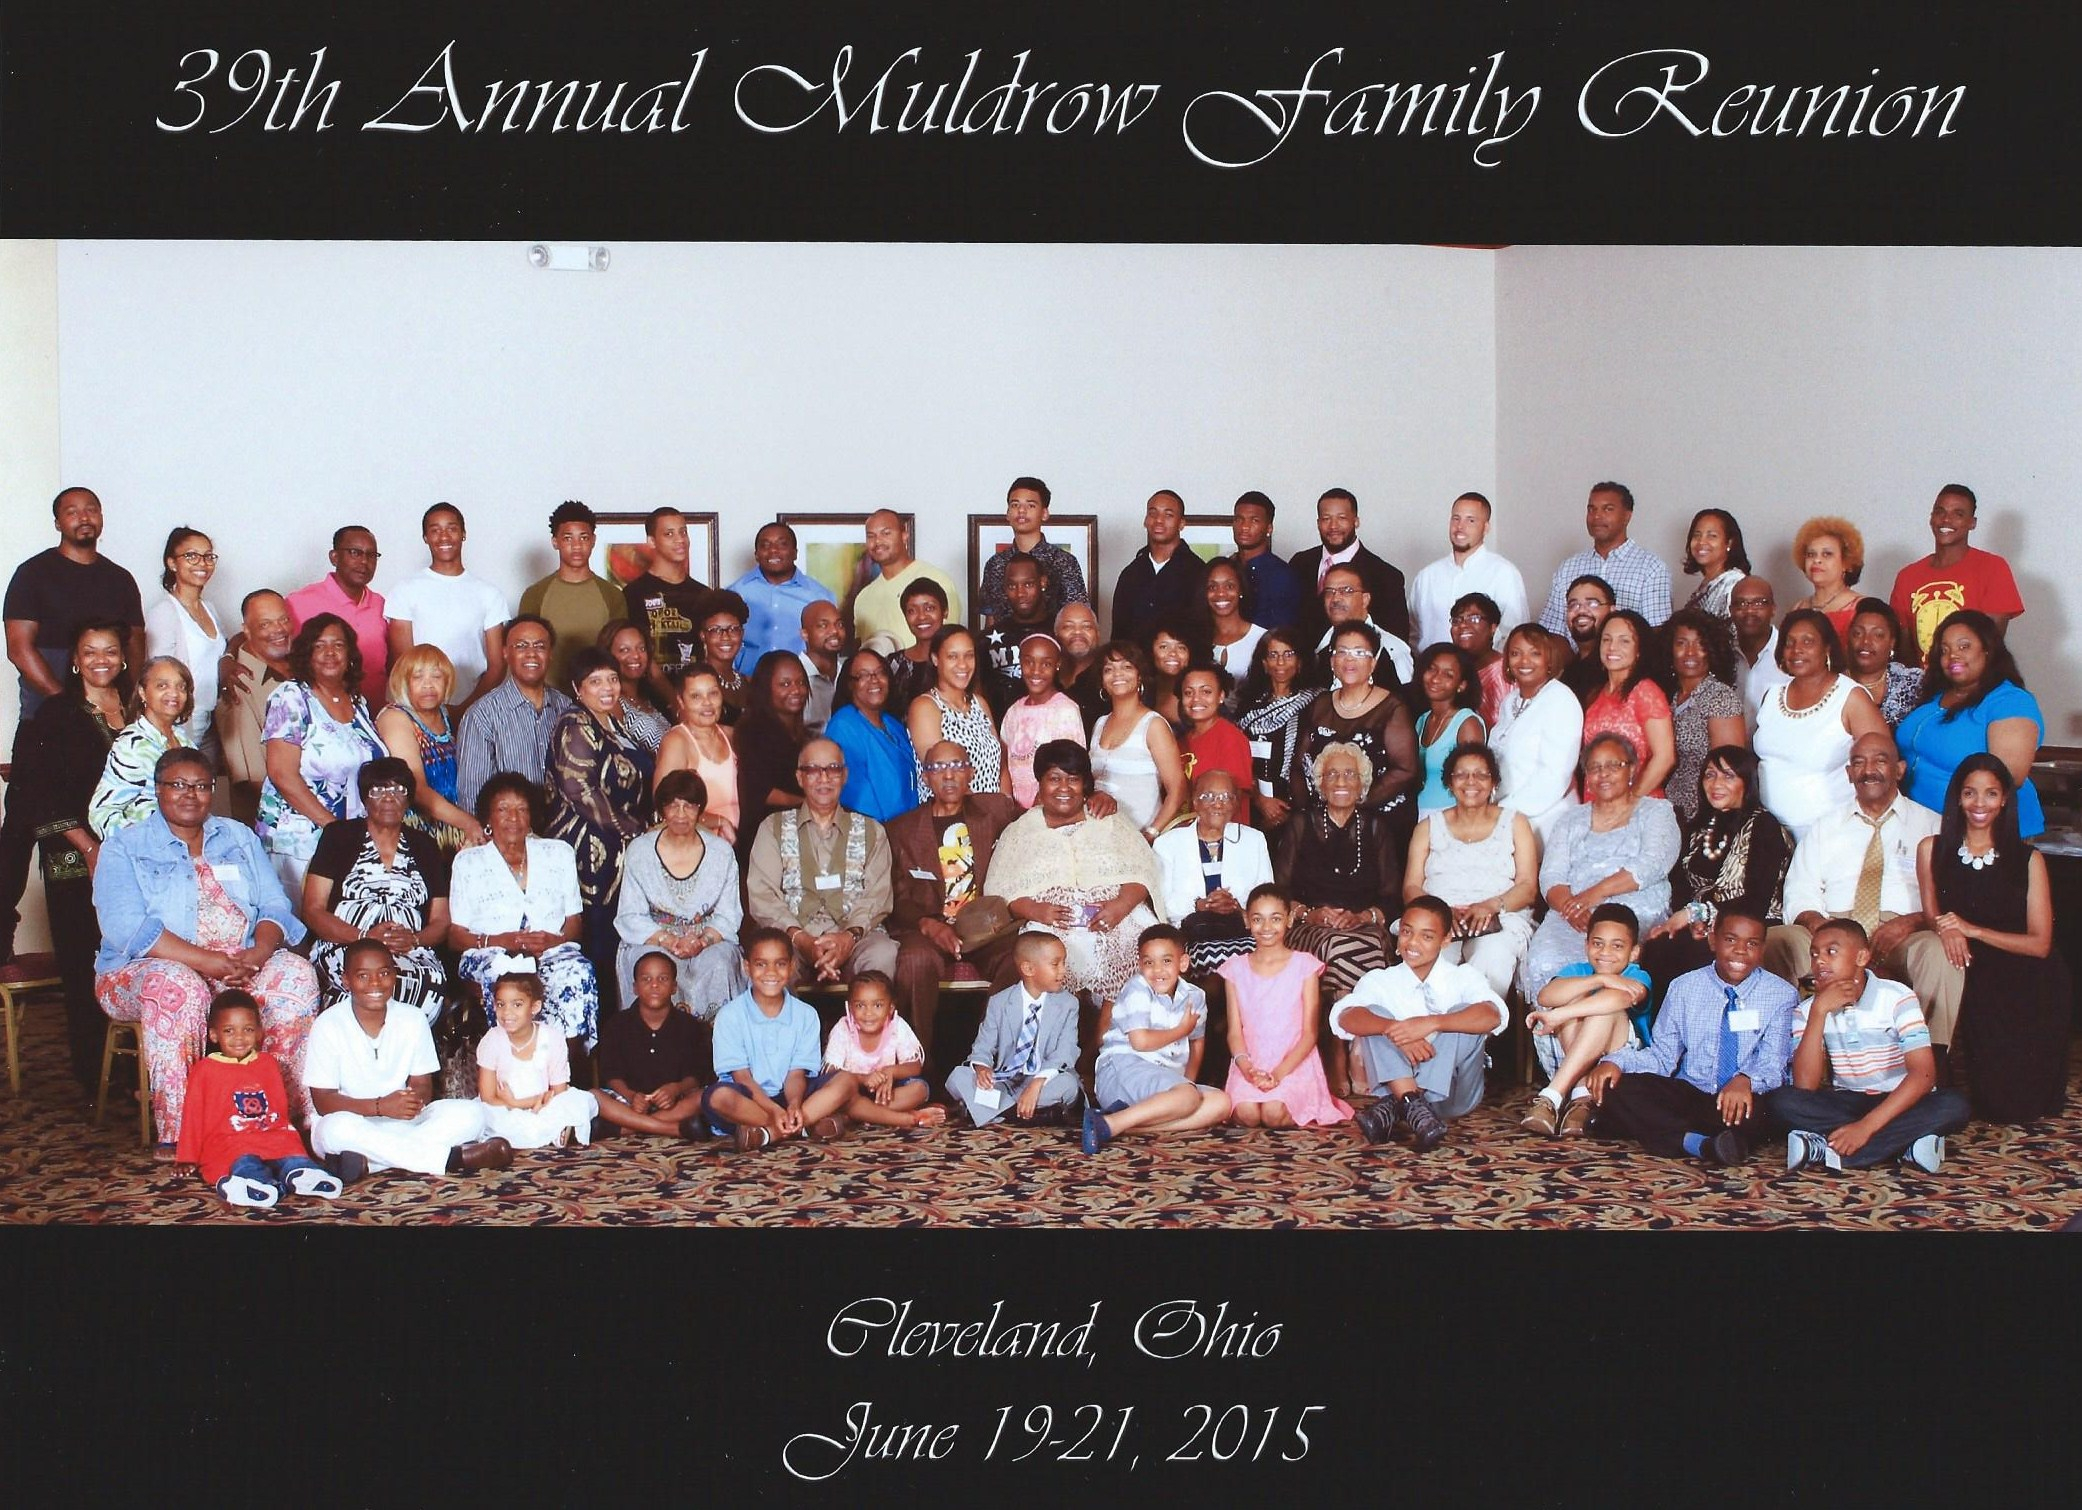 Muldrow Annual Family Reunion-39th Cleveland, Ohio 2015